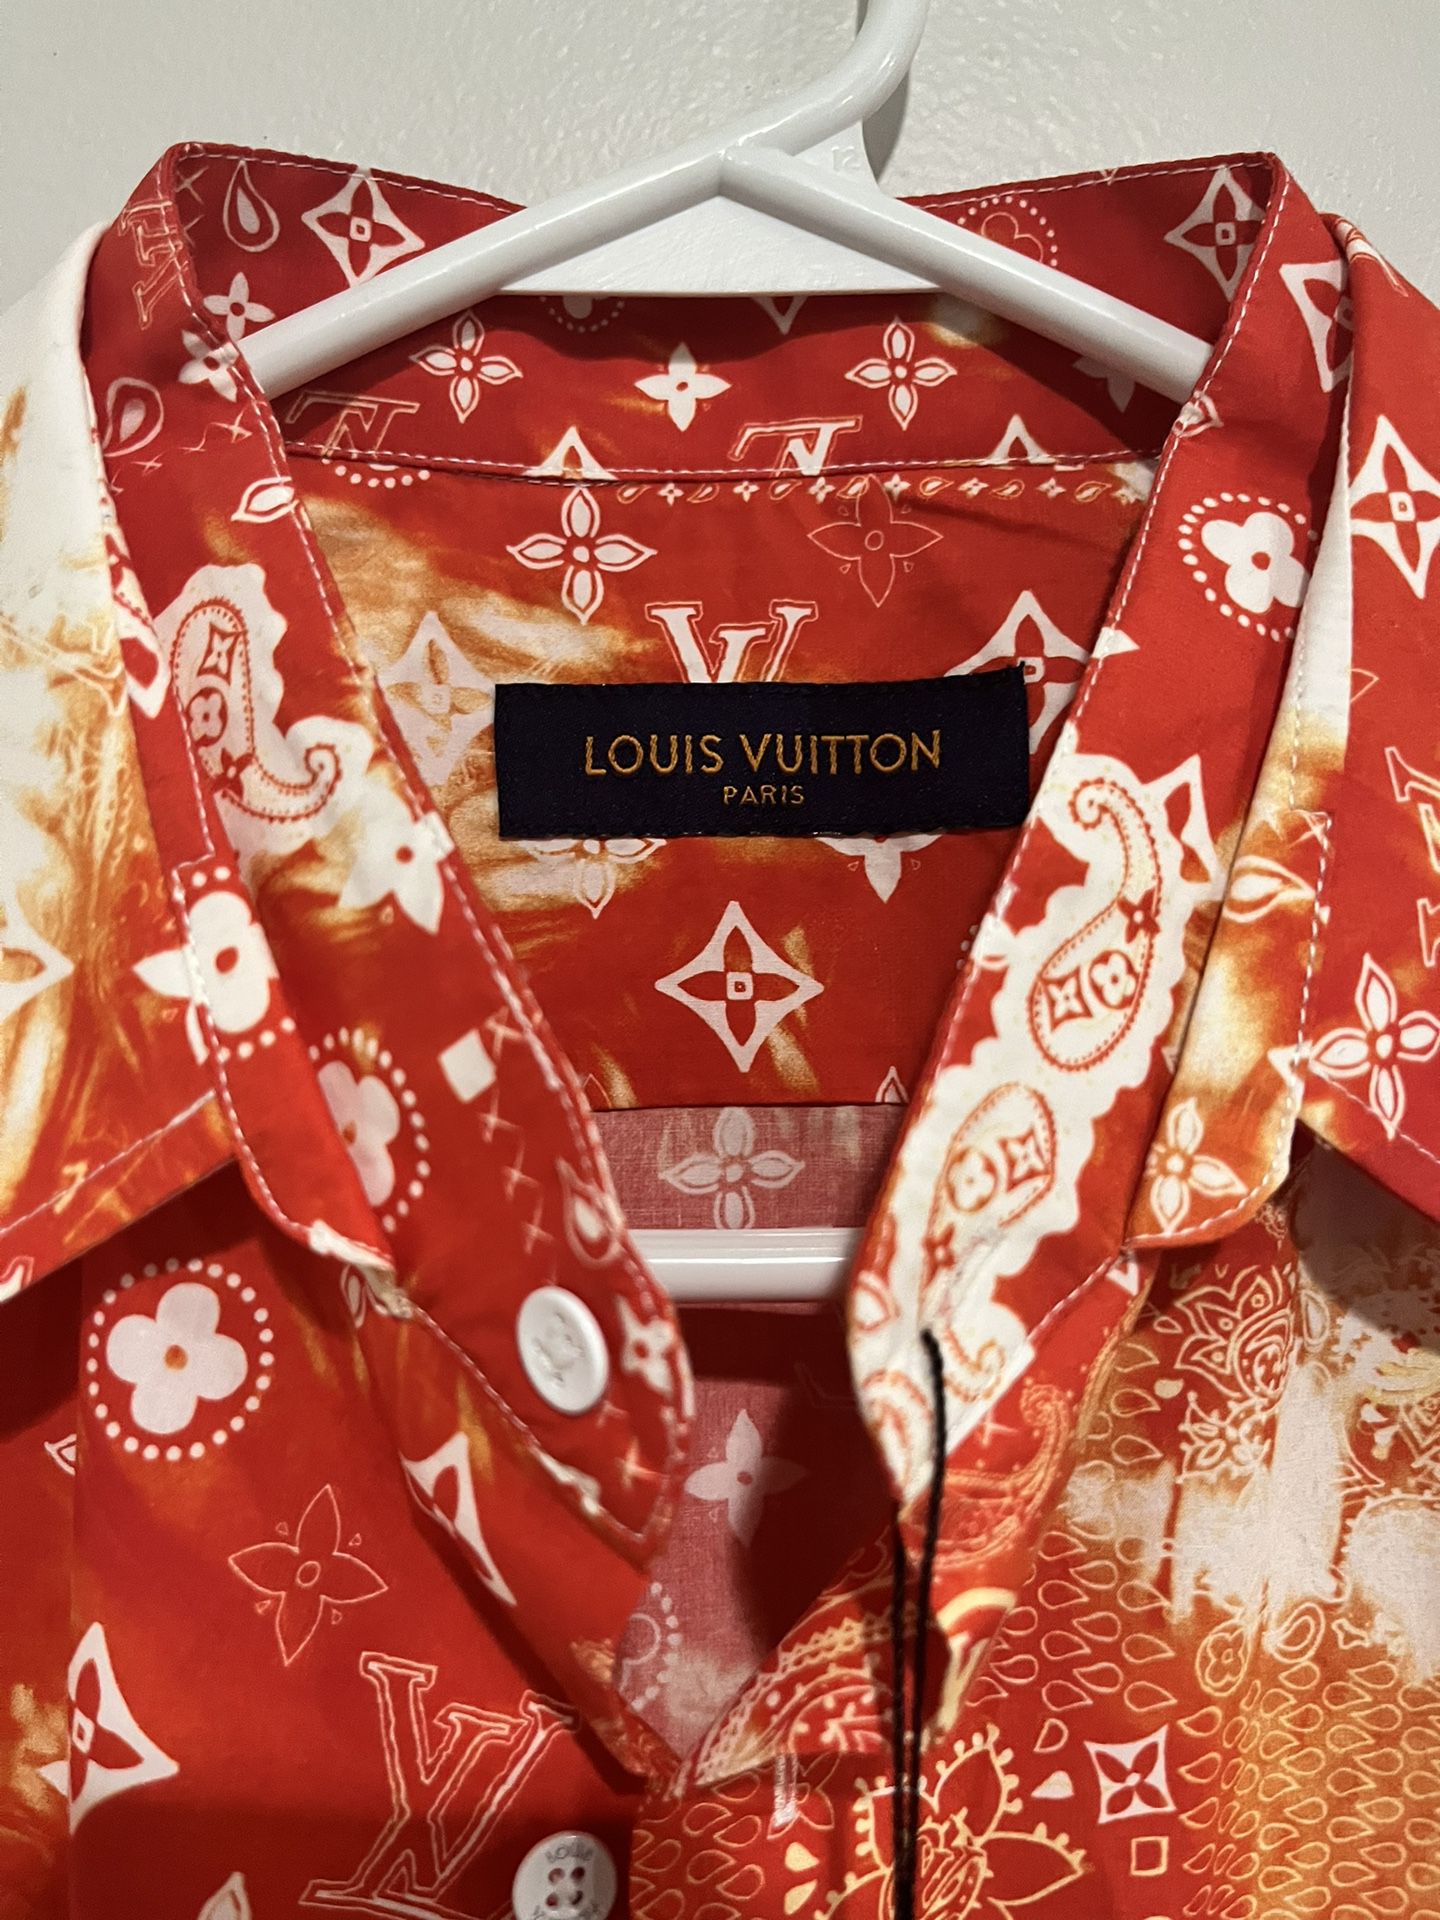 The Louis Vuitton monogram bandana short-sleeved shirt worn by in